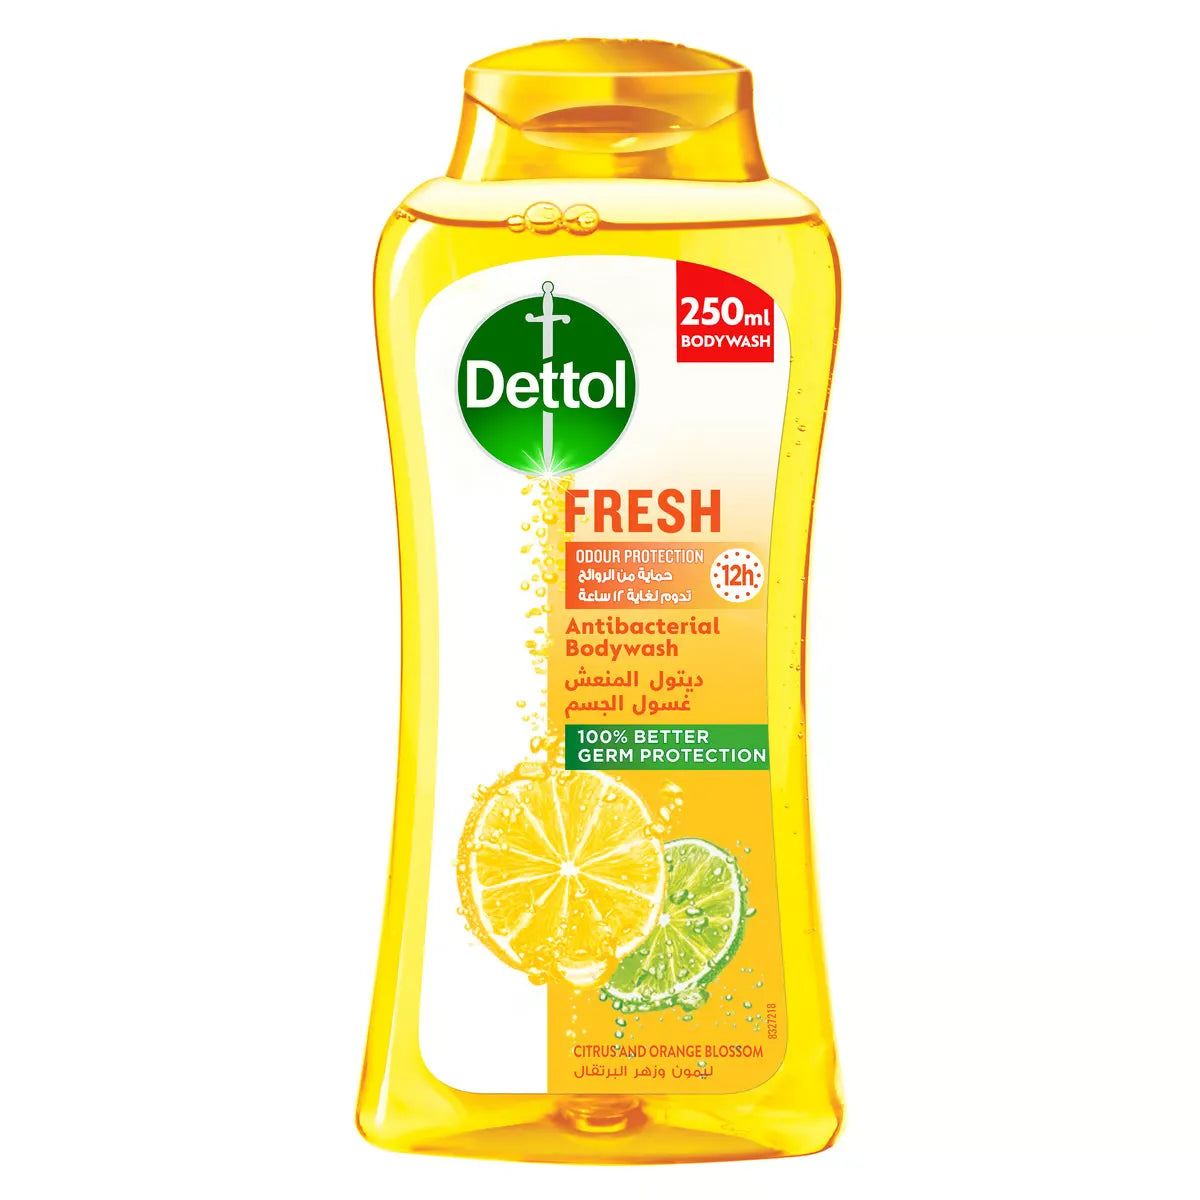 Dettol Anti-Bacterial Body Wash bottle (250ml) in Citrus & Orange Blossom scent.